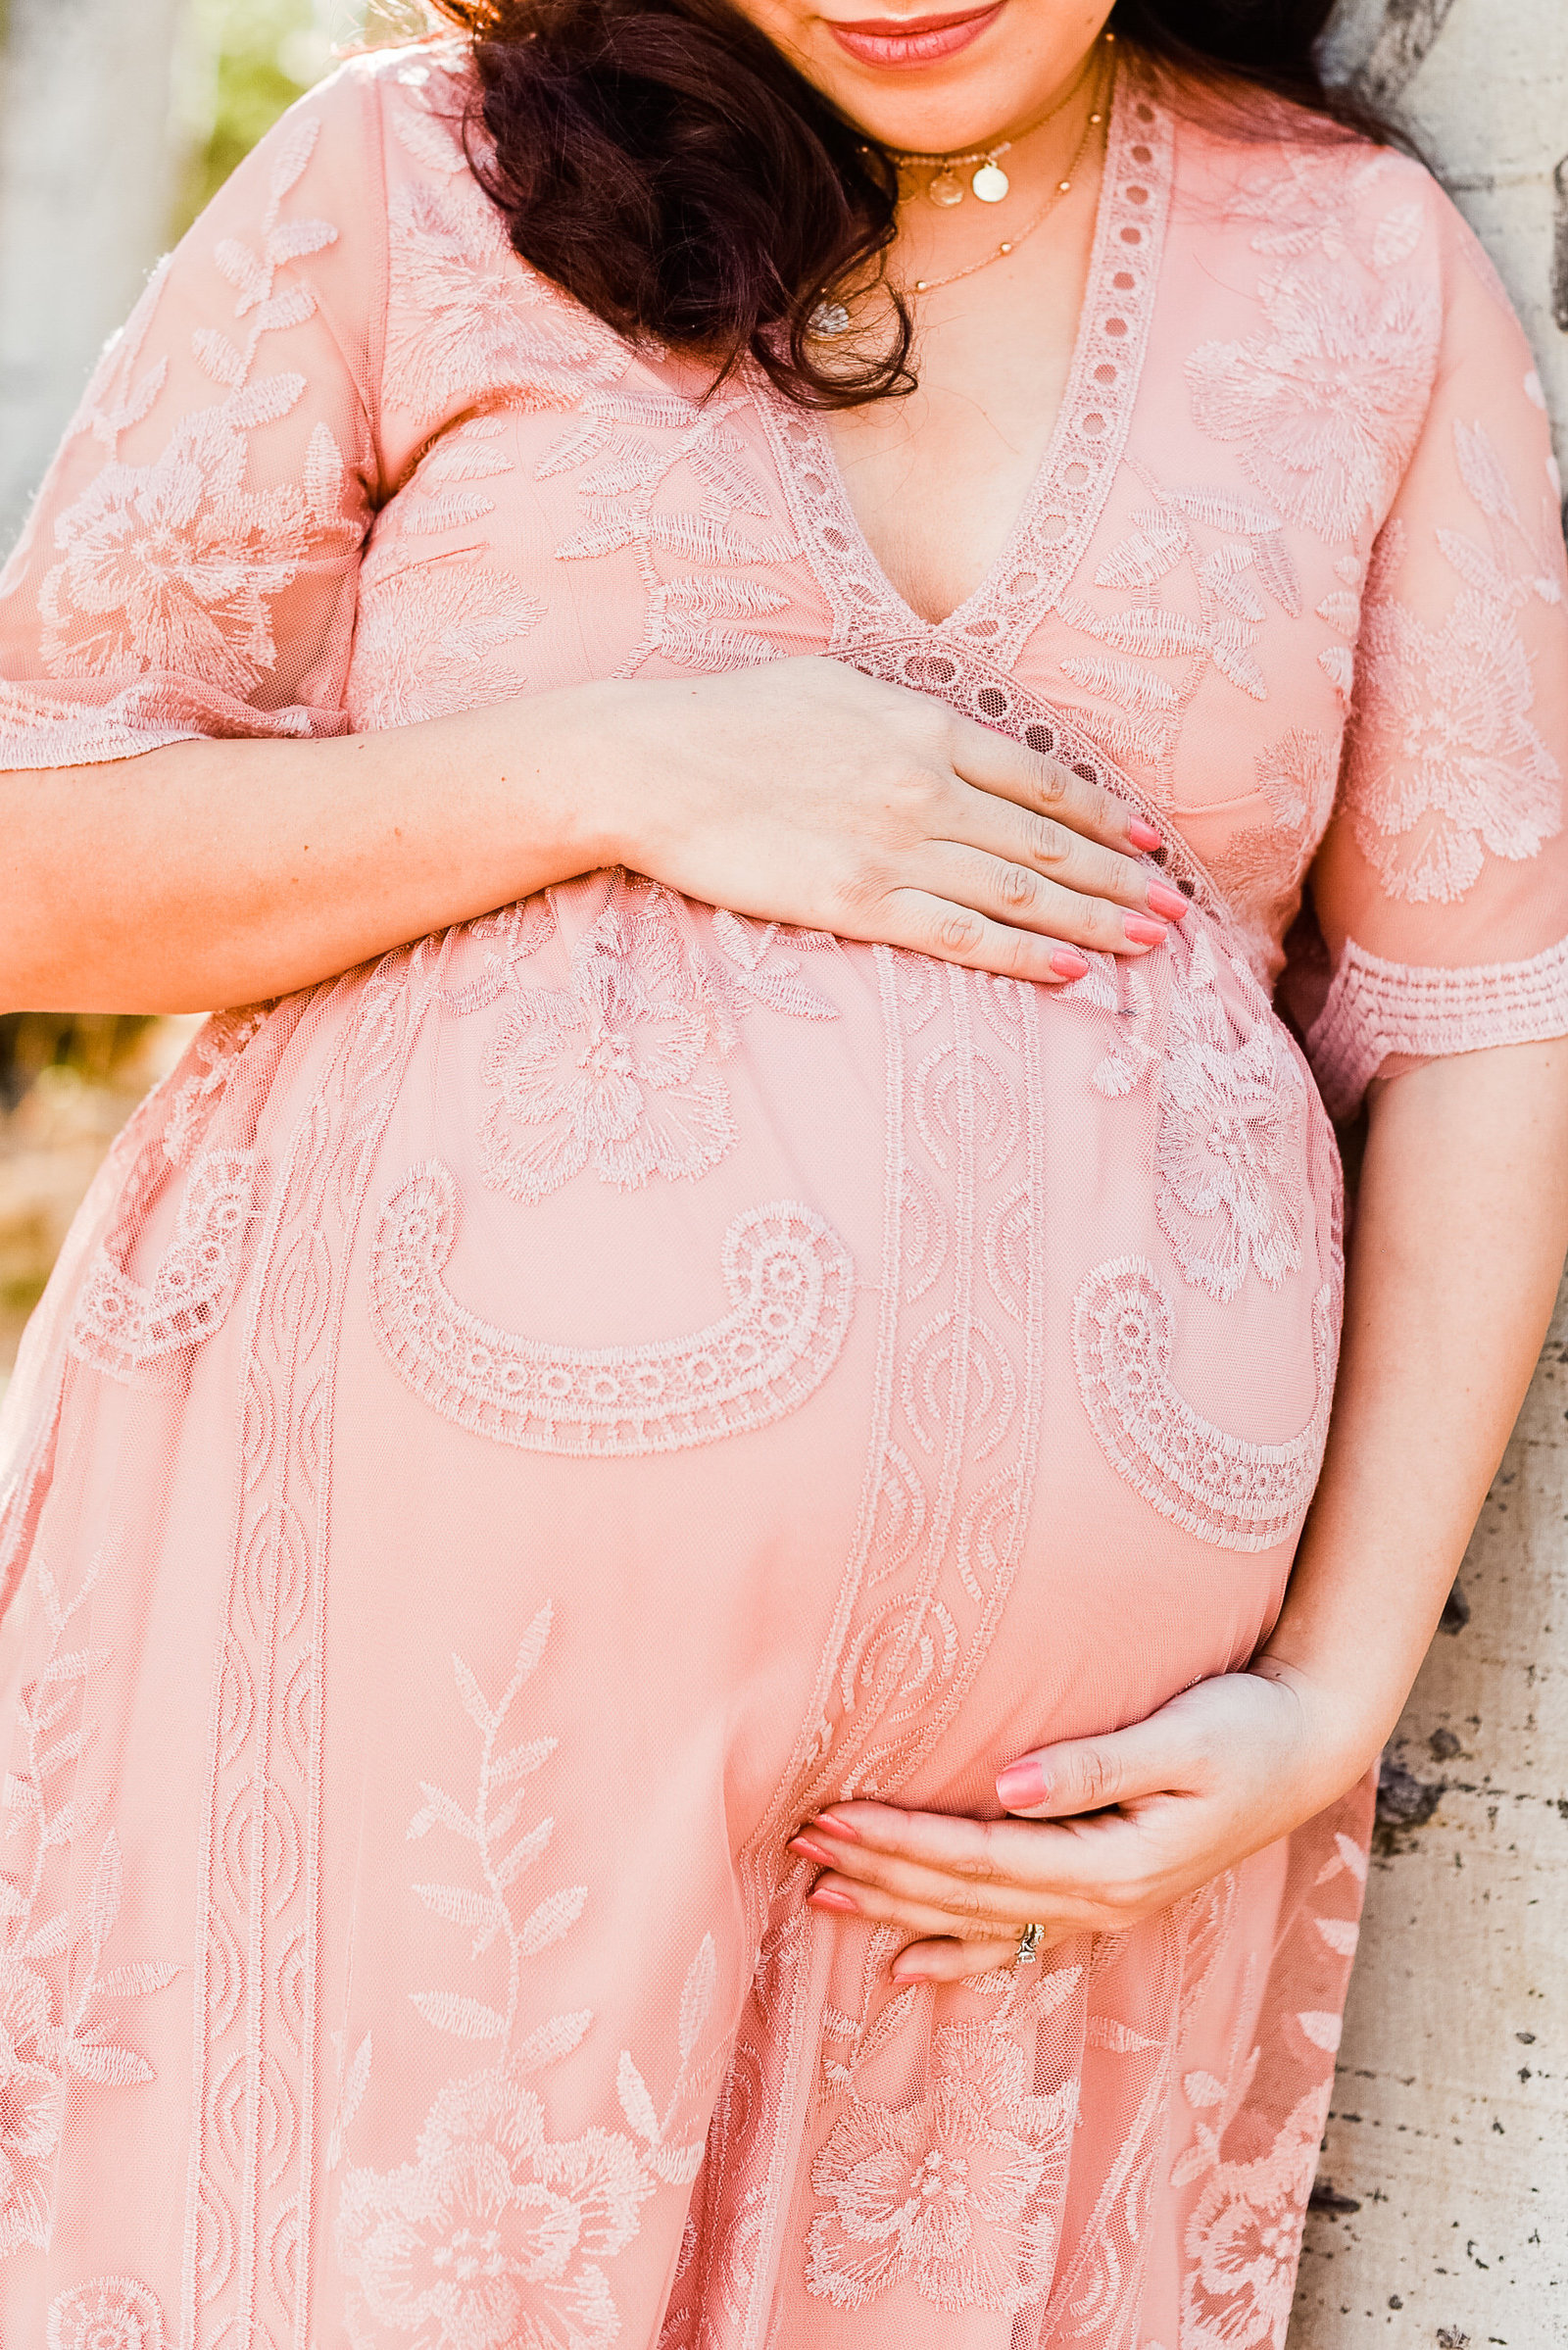 Pregnant women holding belly pregnancy announcement Flagstaff Arizona Snowbowl